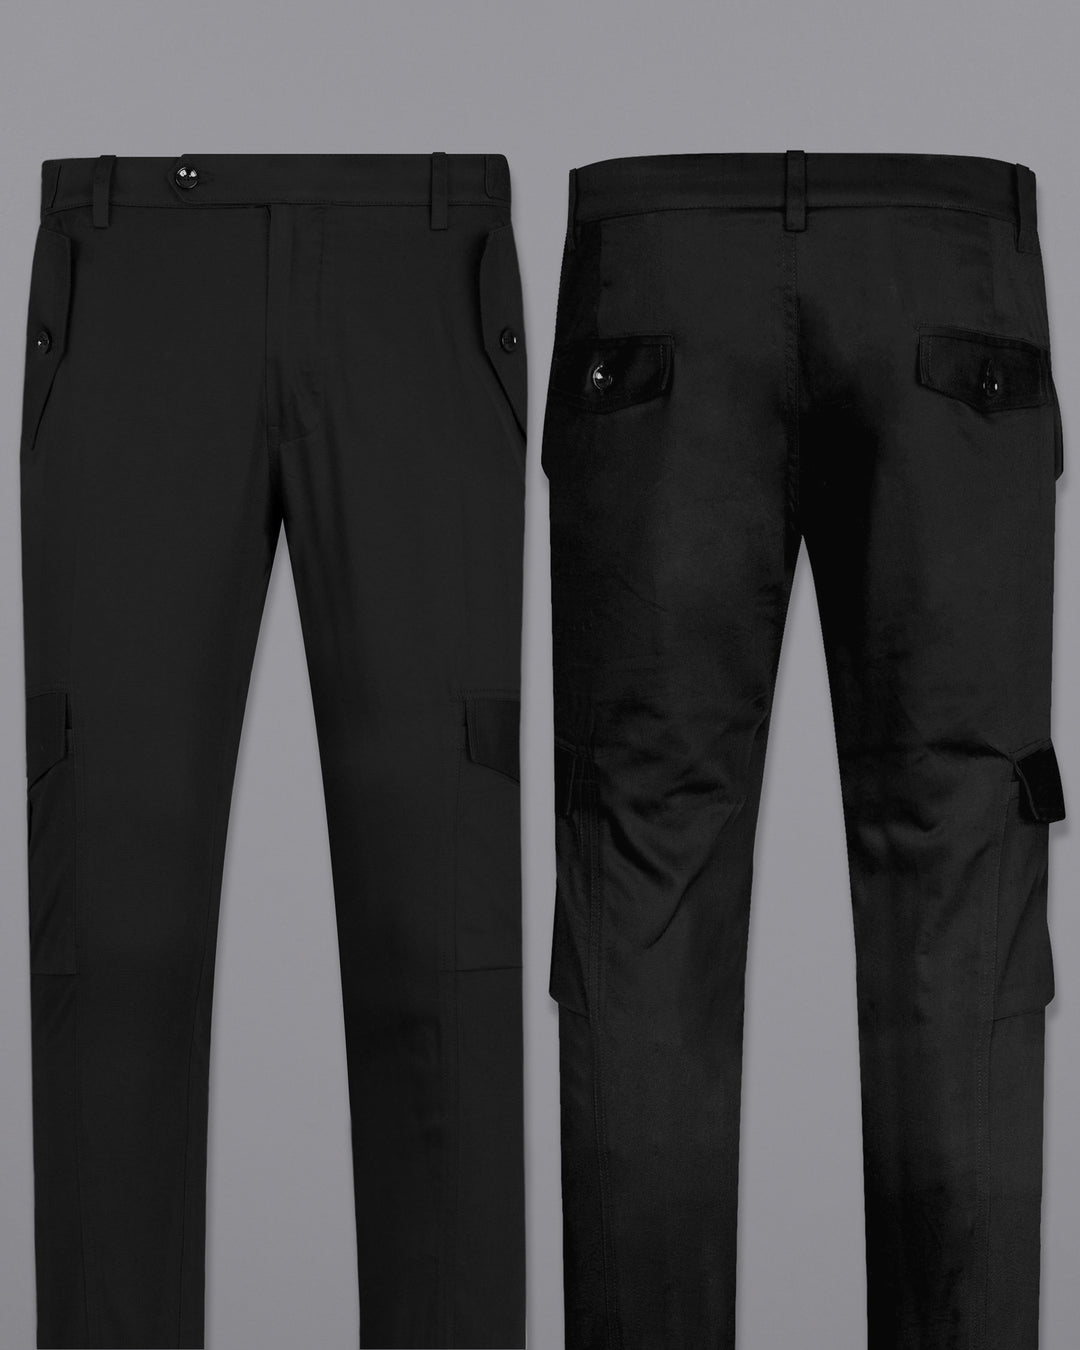 Black Squad 12 Pocket Cargo pants  Bottomwear  The Seed Store